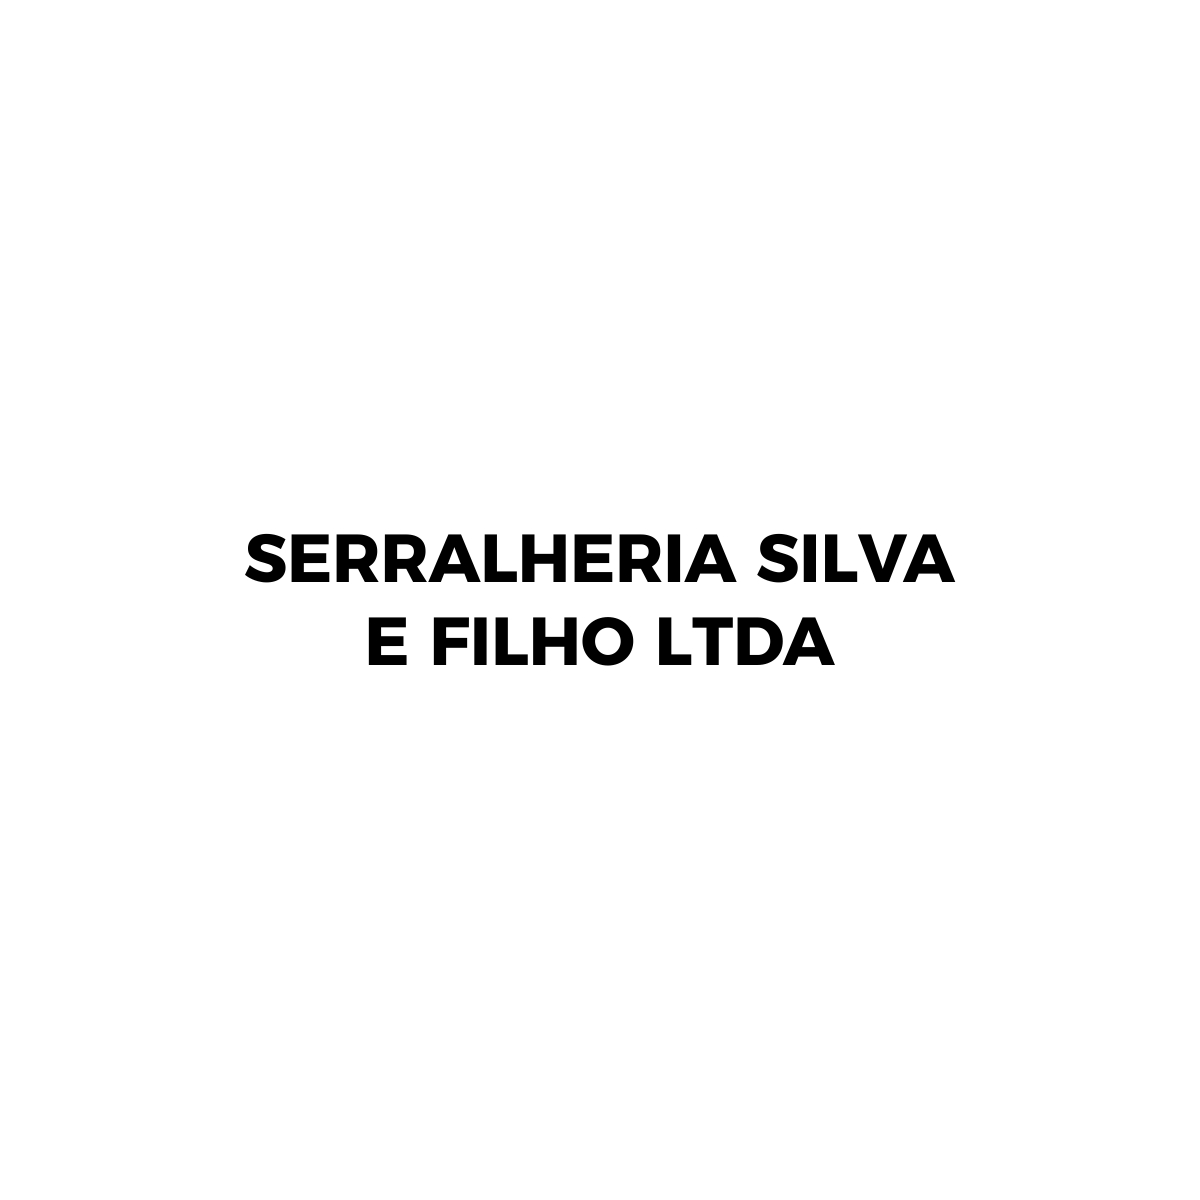 Serralheria Silva e Filho Ltda